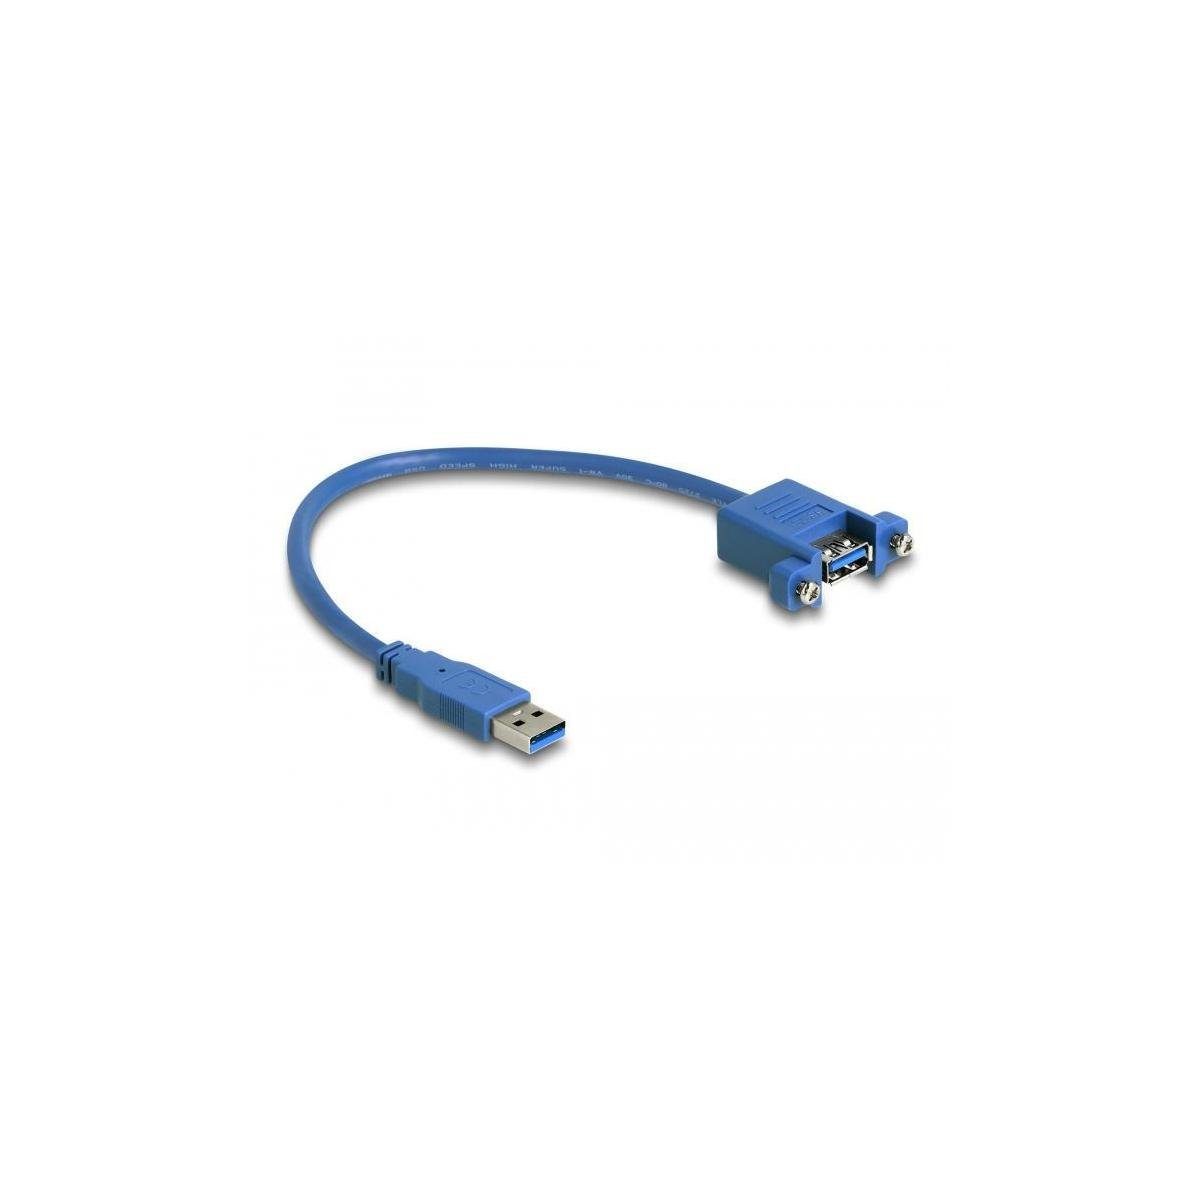 Delock 86994 - Kabel USB 3.0 Typ-A Stecker zu USB 3.0 Typ-A... Computer-Kabel, USB A, USB